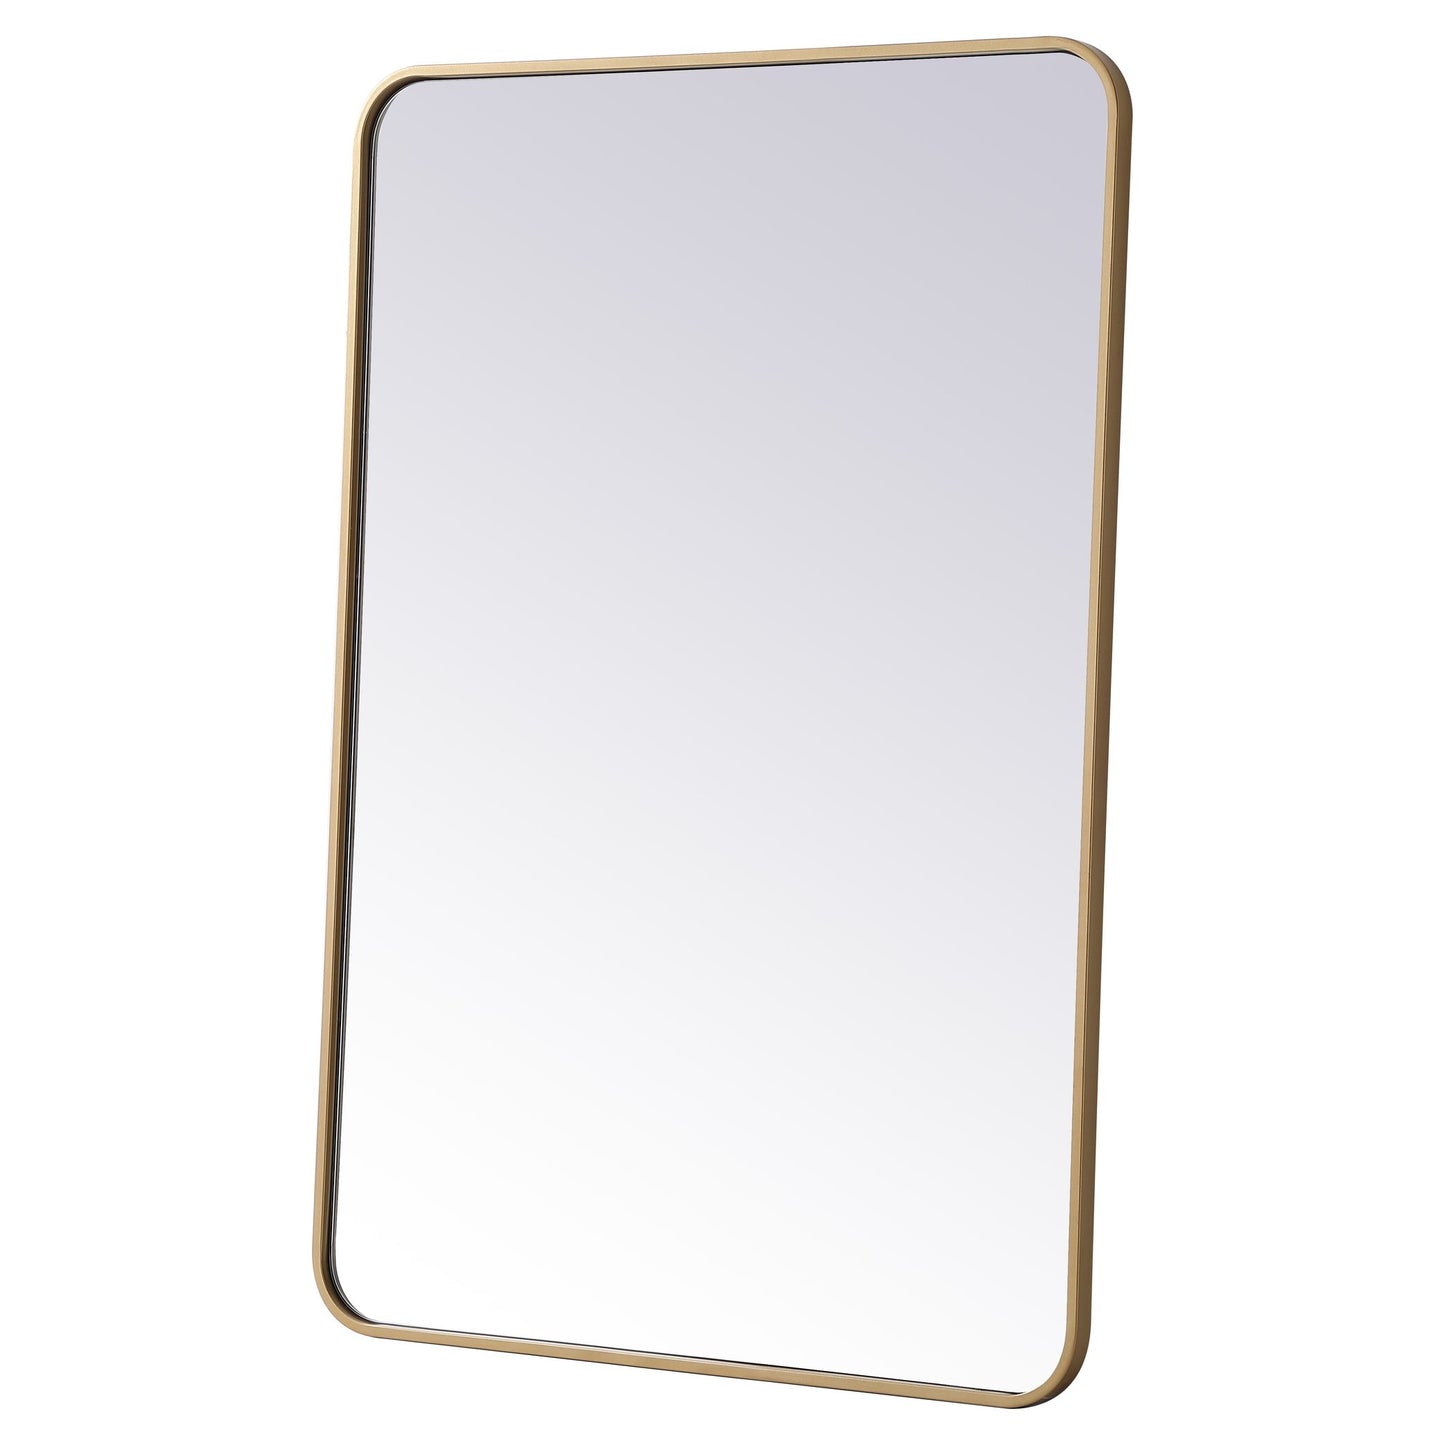 MR802740BR Evermore 27" x 40" Metal Framed Rectangular Mirror in Brass